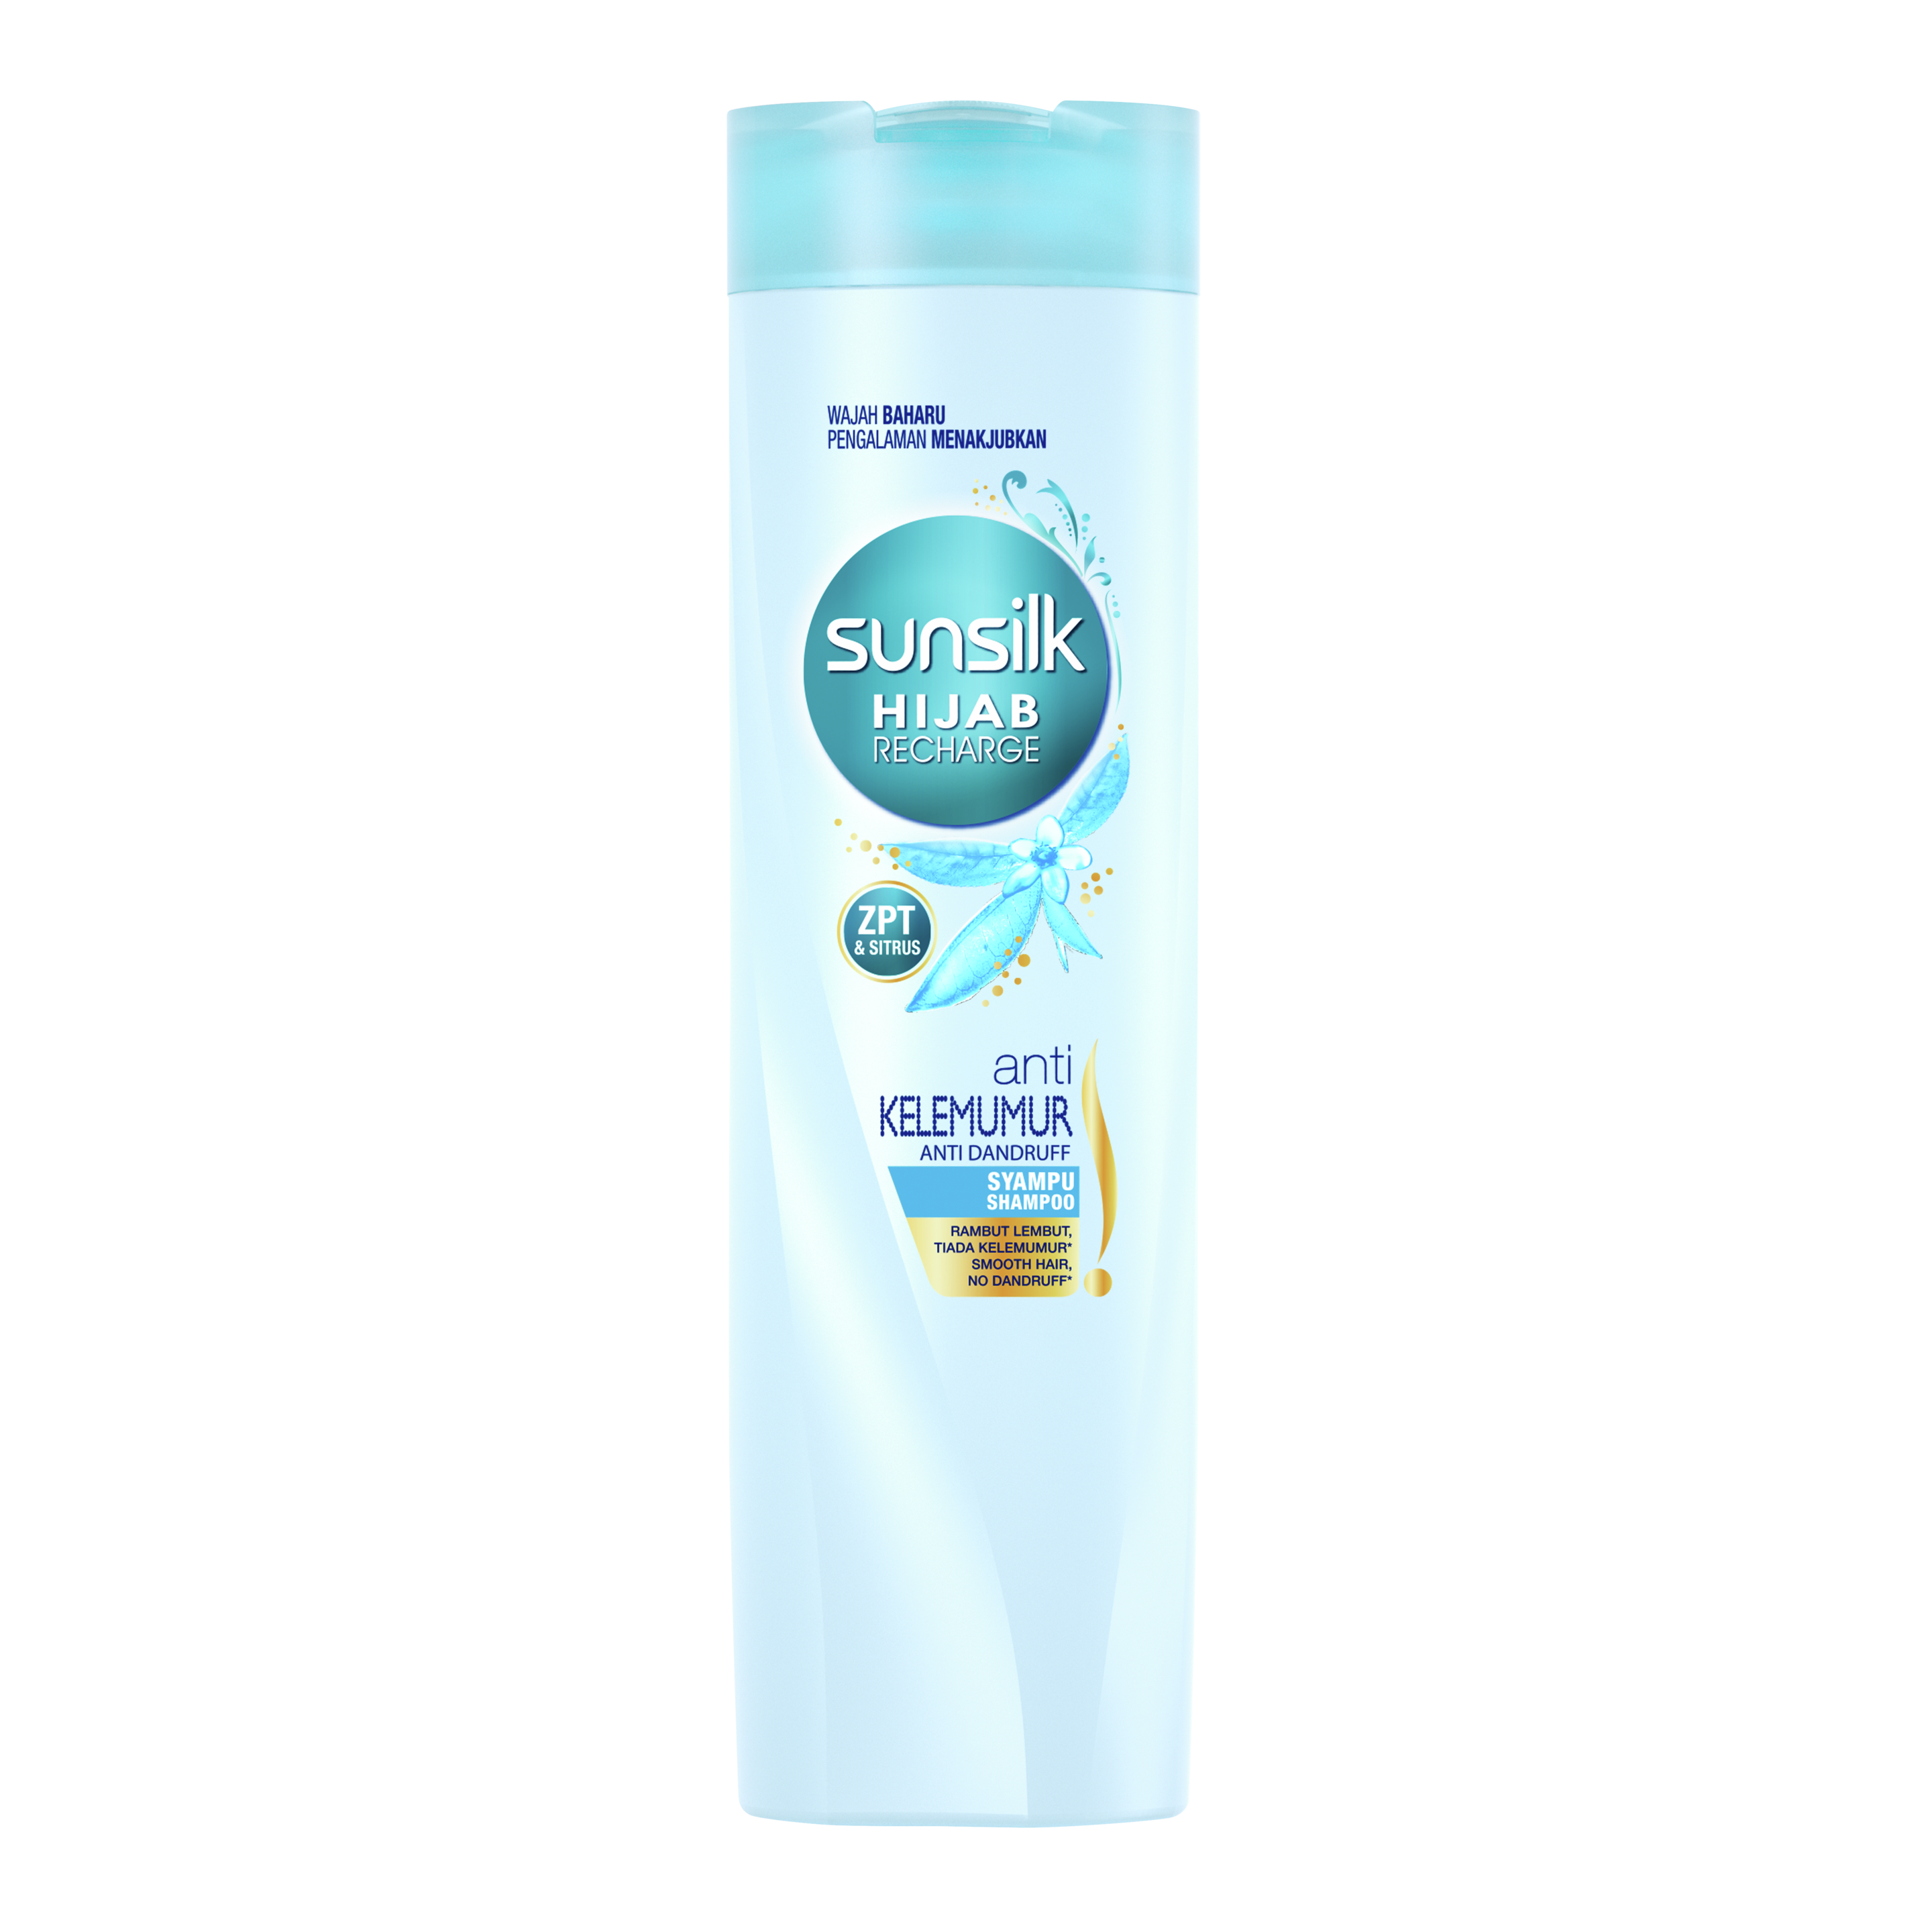 Sunsilk Hijab Recharge Anti Kelemumur Shampoo 320ml front of pack image